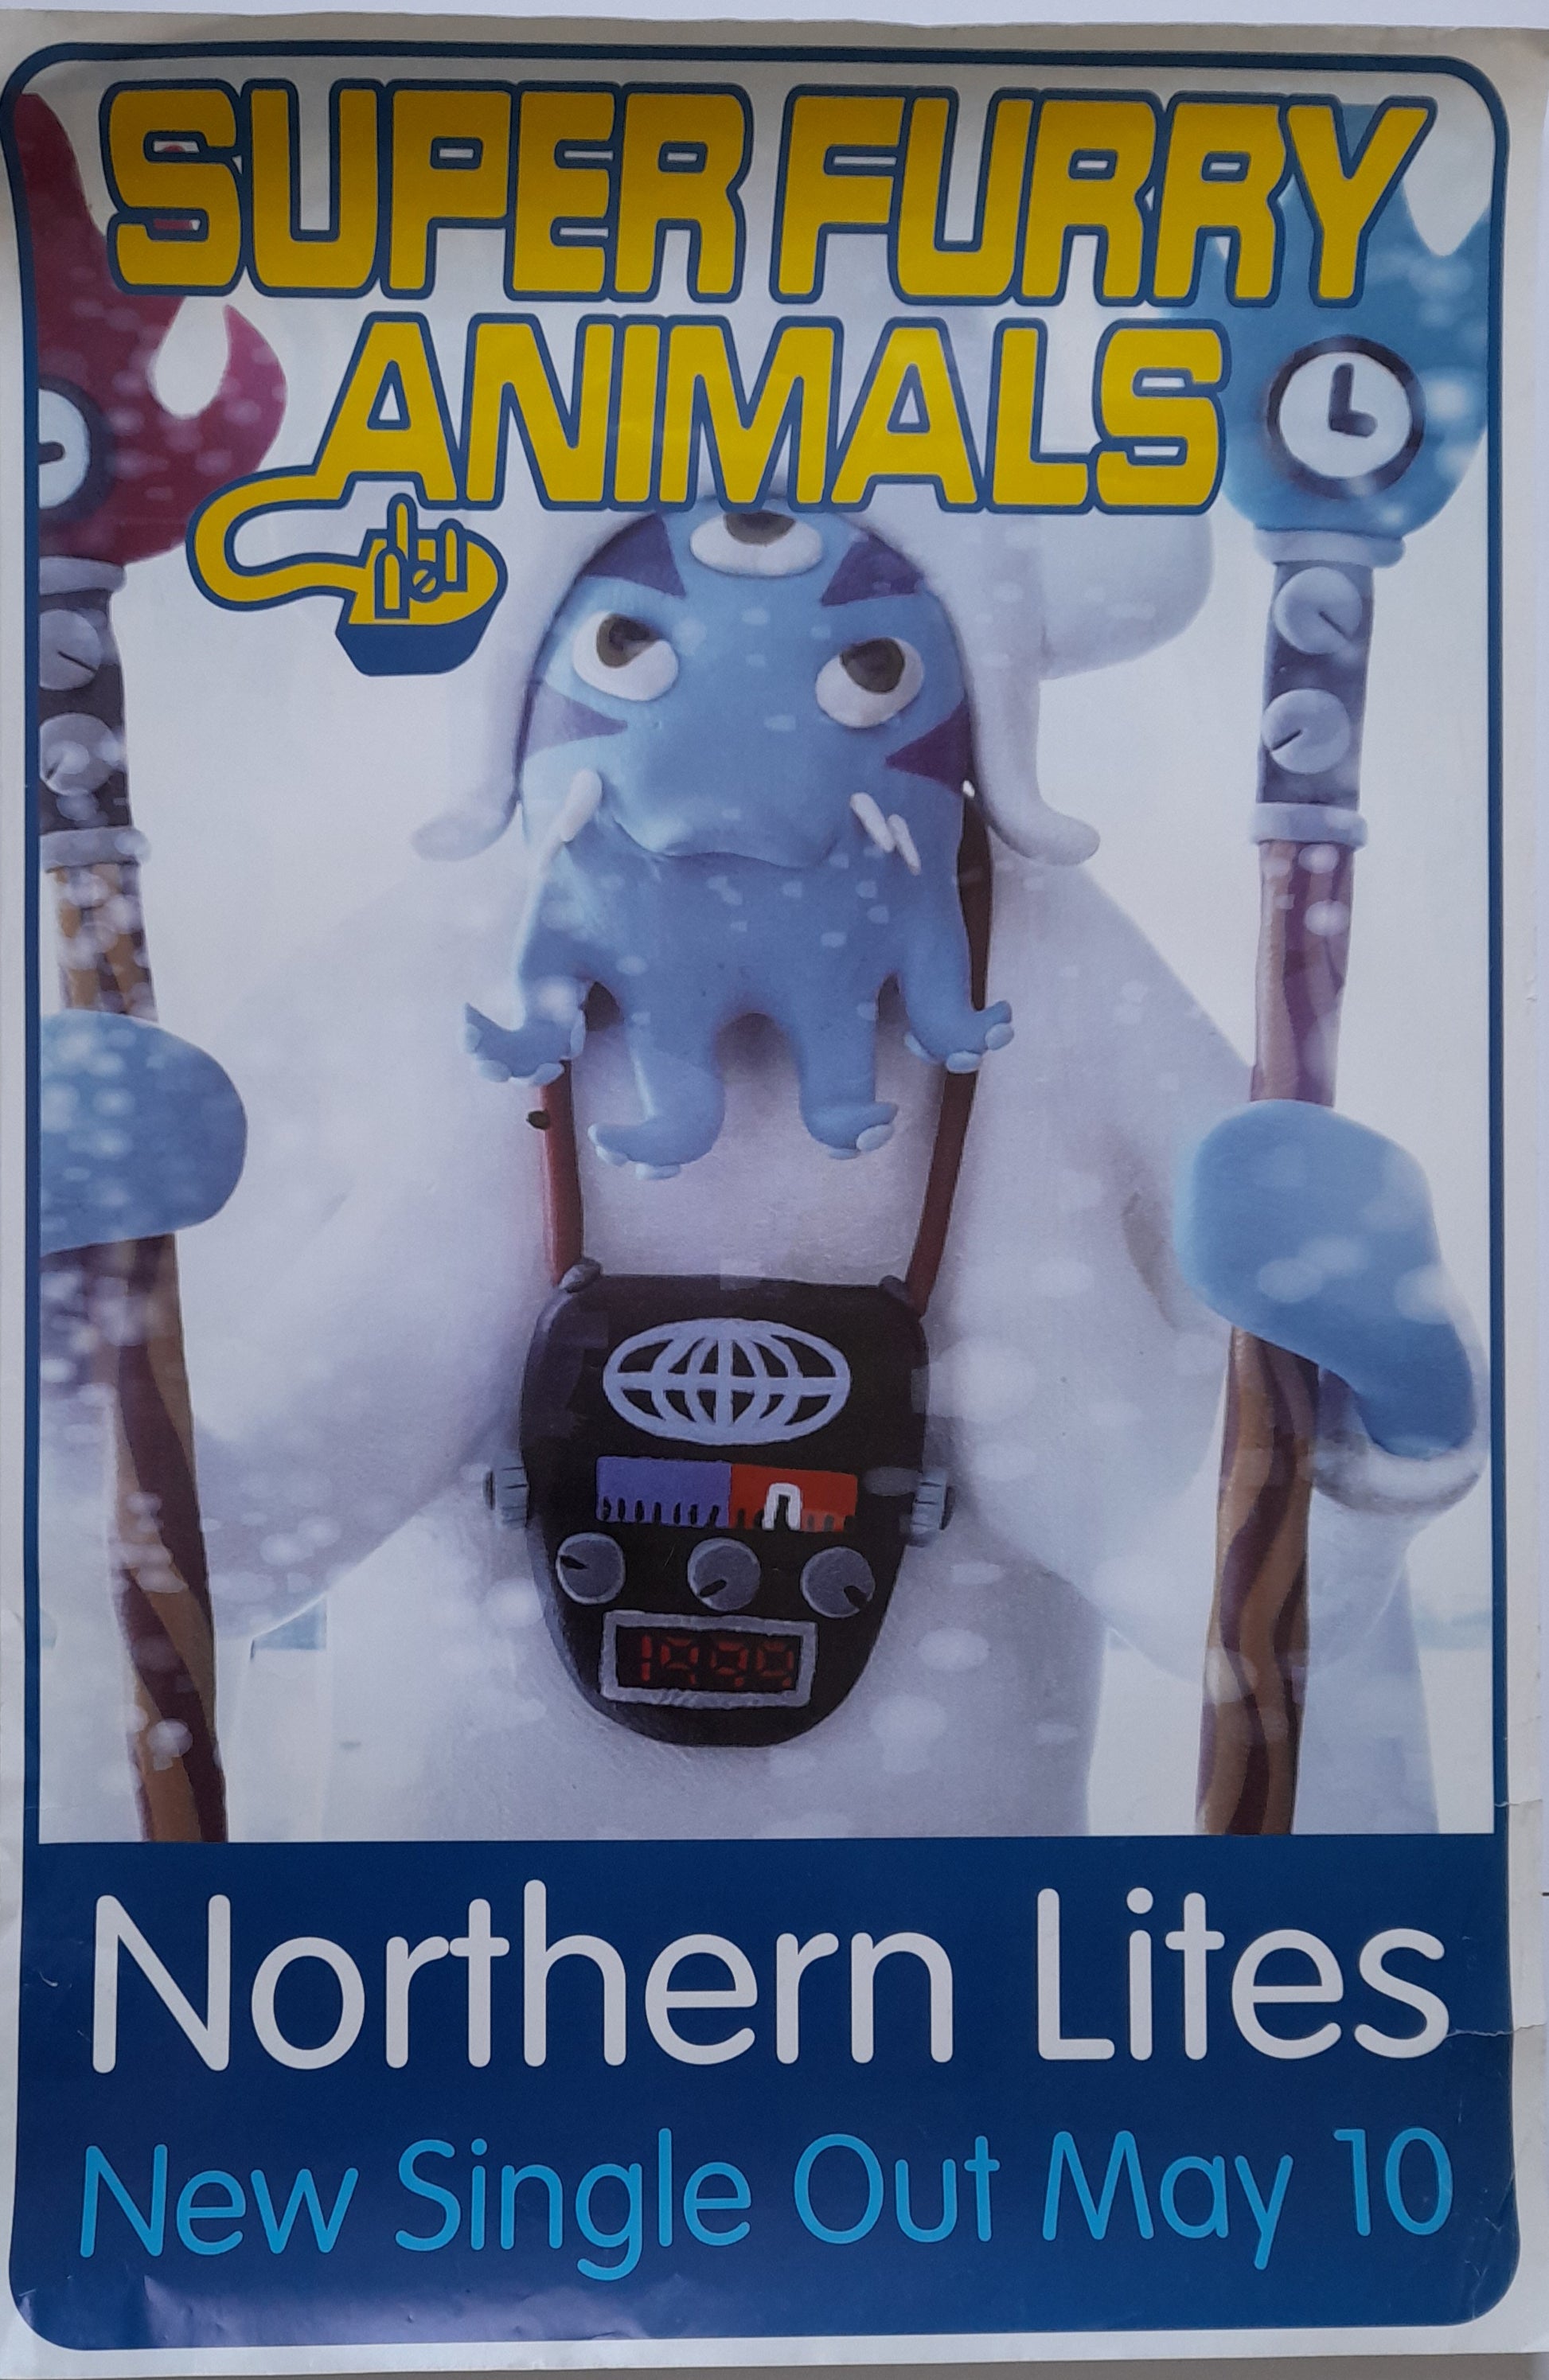 Super Furry Animals Northern Lites single UK Promotional Poster